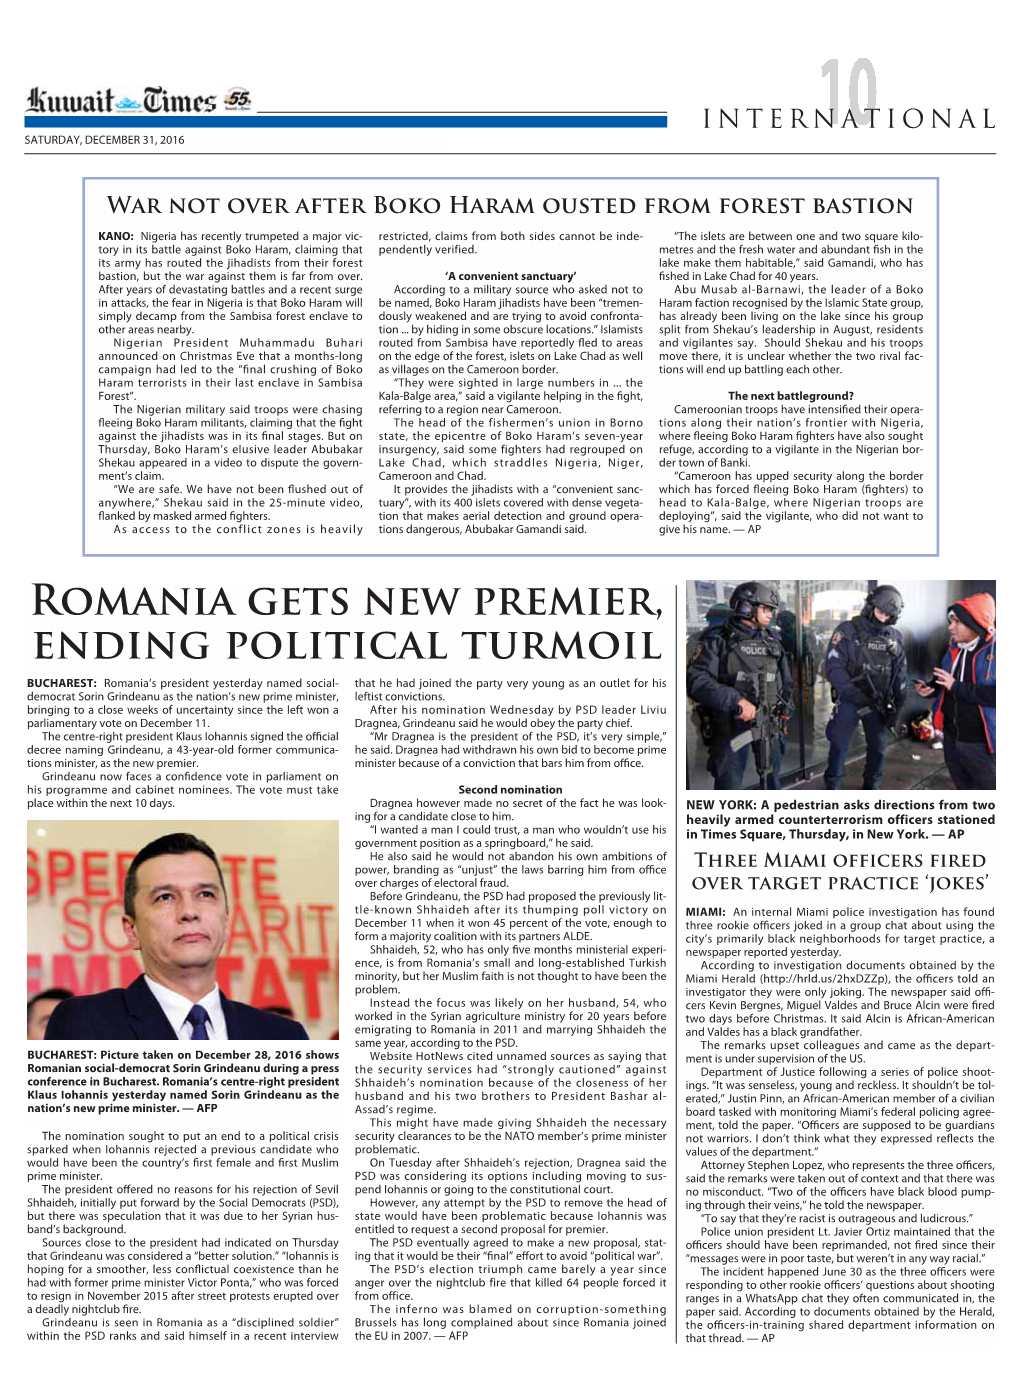 Romania Gets New Premier, Ending Political Turmoil